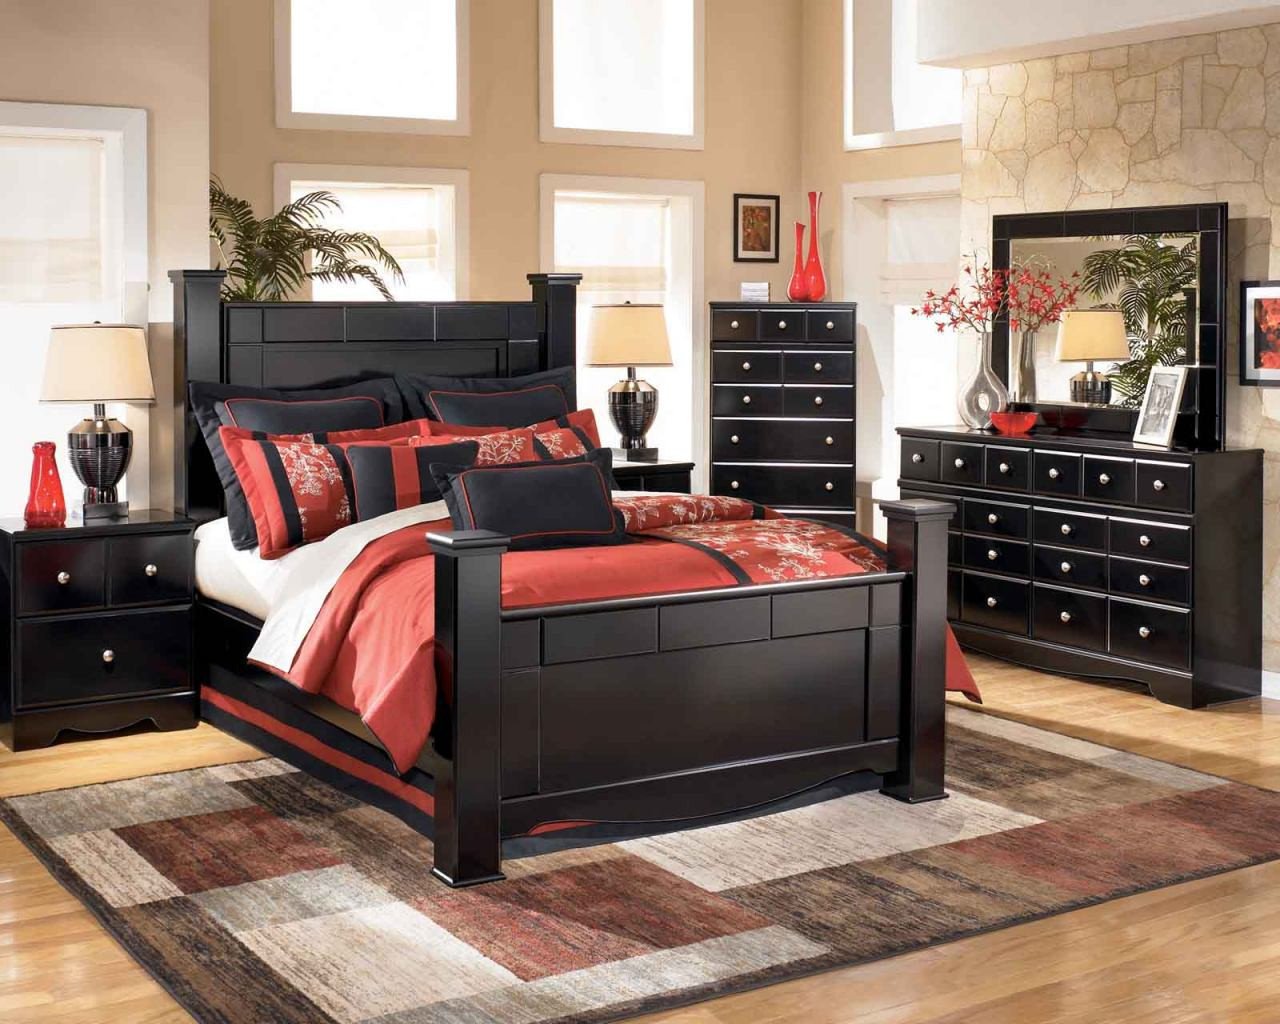 Bedroom Furniture Sale Clearance Best Of Shay Poster Bedroom Set In Black